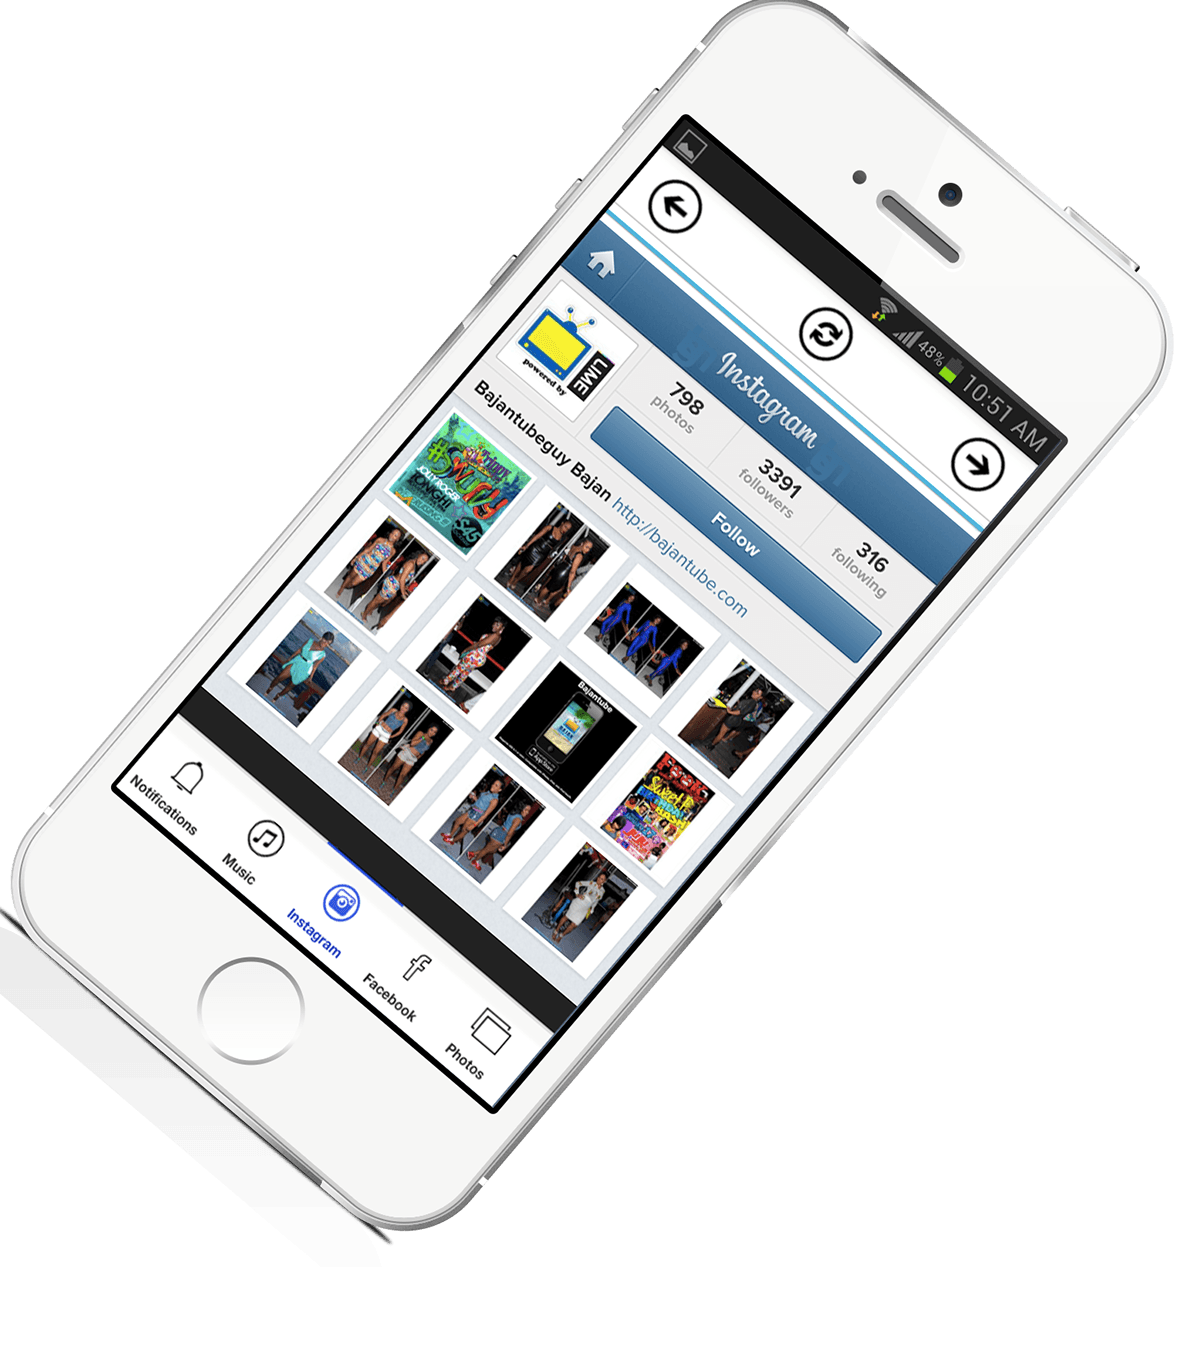 ios iphone app iPad App ipod app andrpid app Tablet app Mobile app